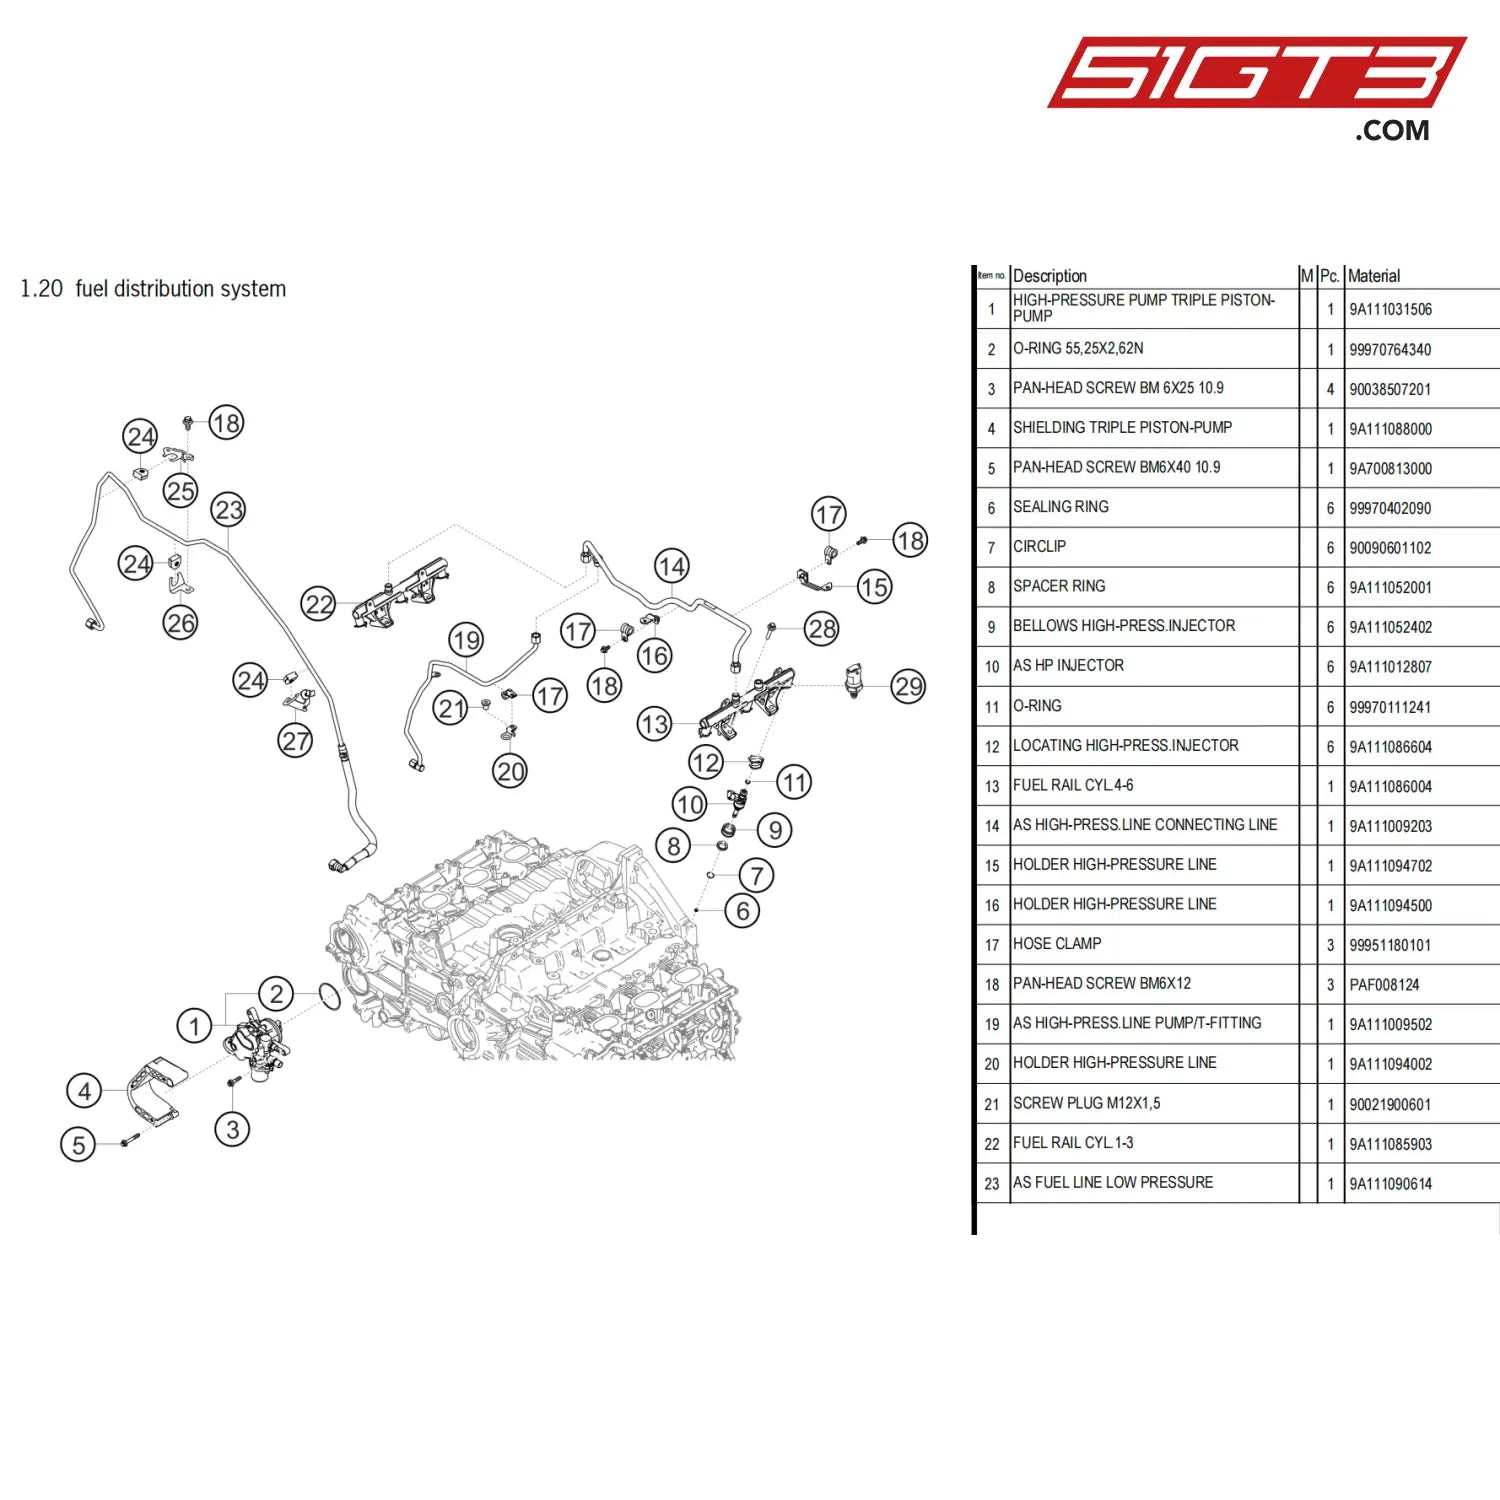 Hose Clamp - 99951180101 [Porsche 718 Cayman Gt4 Clubsport] Fuel Distribution System